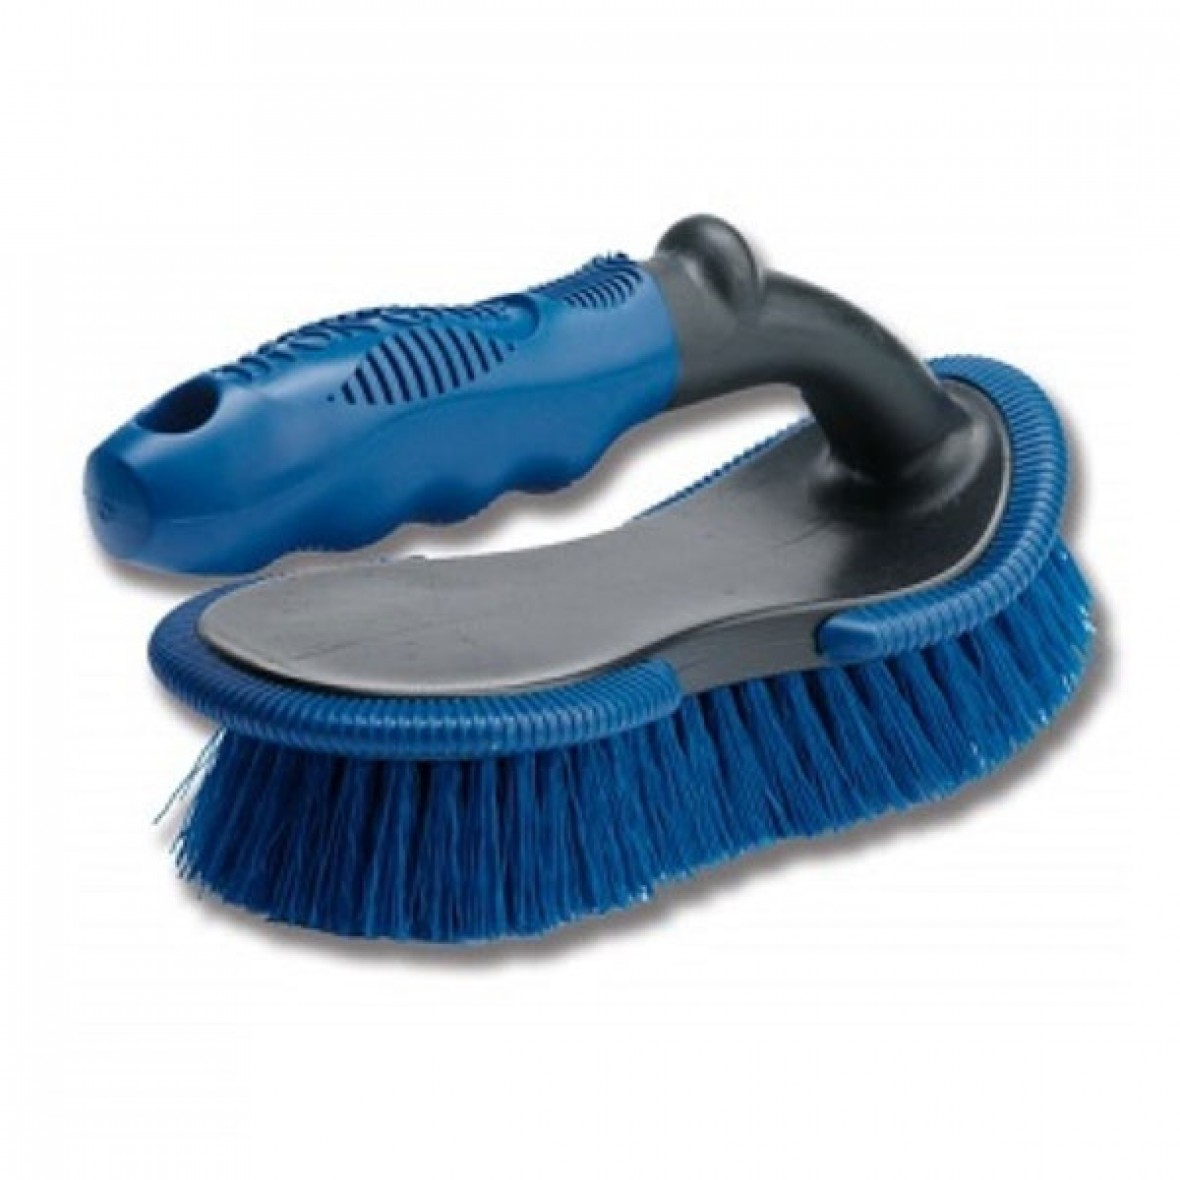 Oster Stiff Grooming Brush - Blue